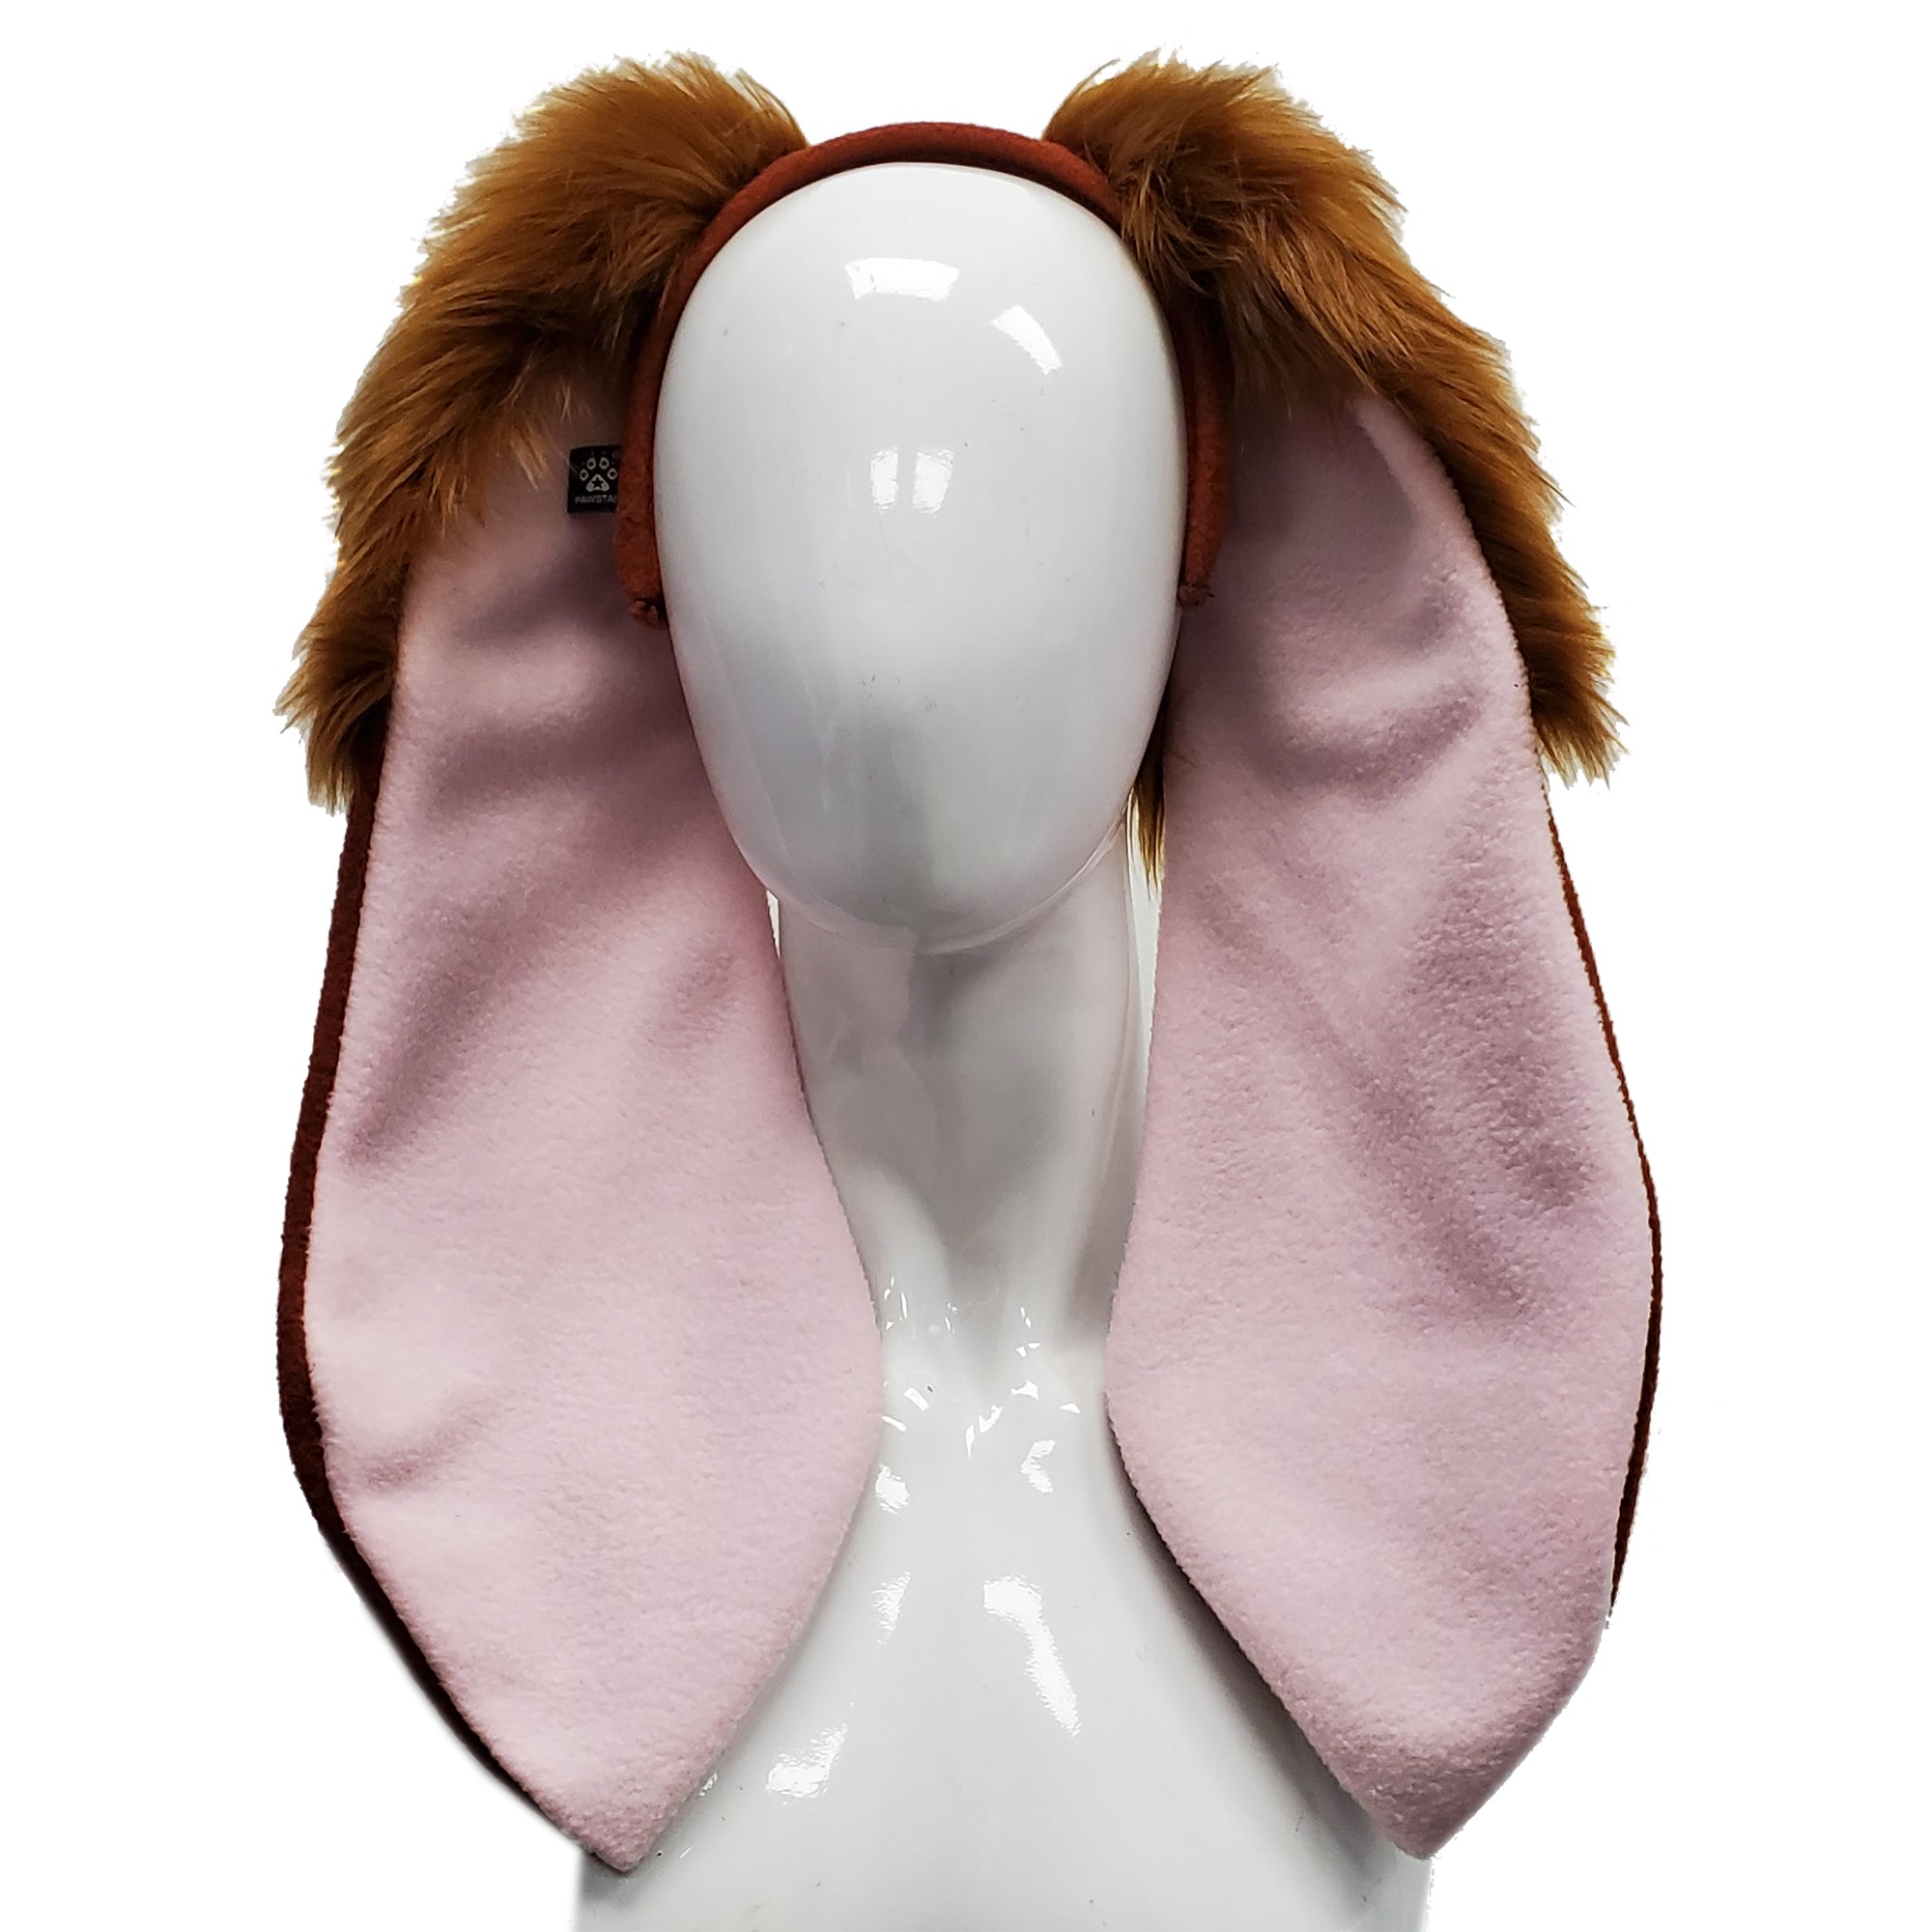 Pawstar Classic Floppy Bunny Rabbit Headband easter bugs judy hopps furry fluffy partial fursuit halloween costume or cosplay accessory